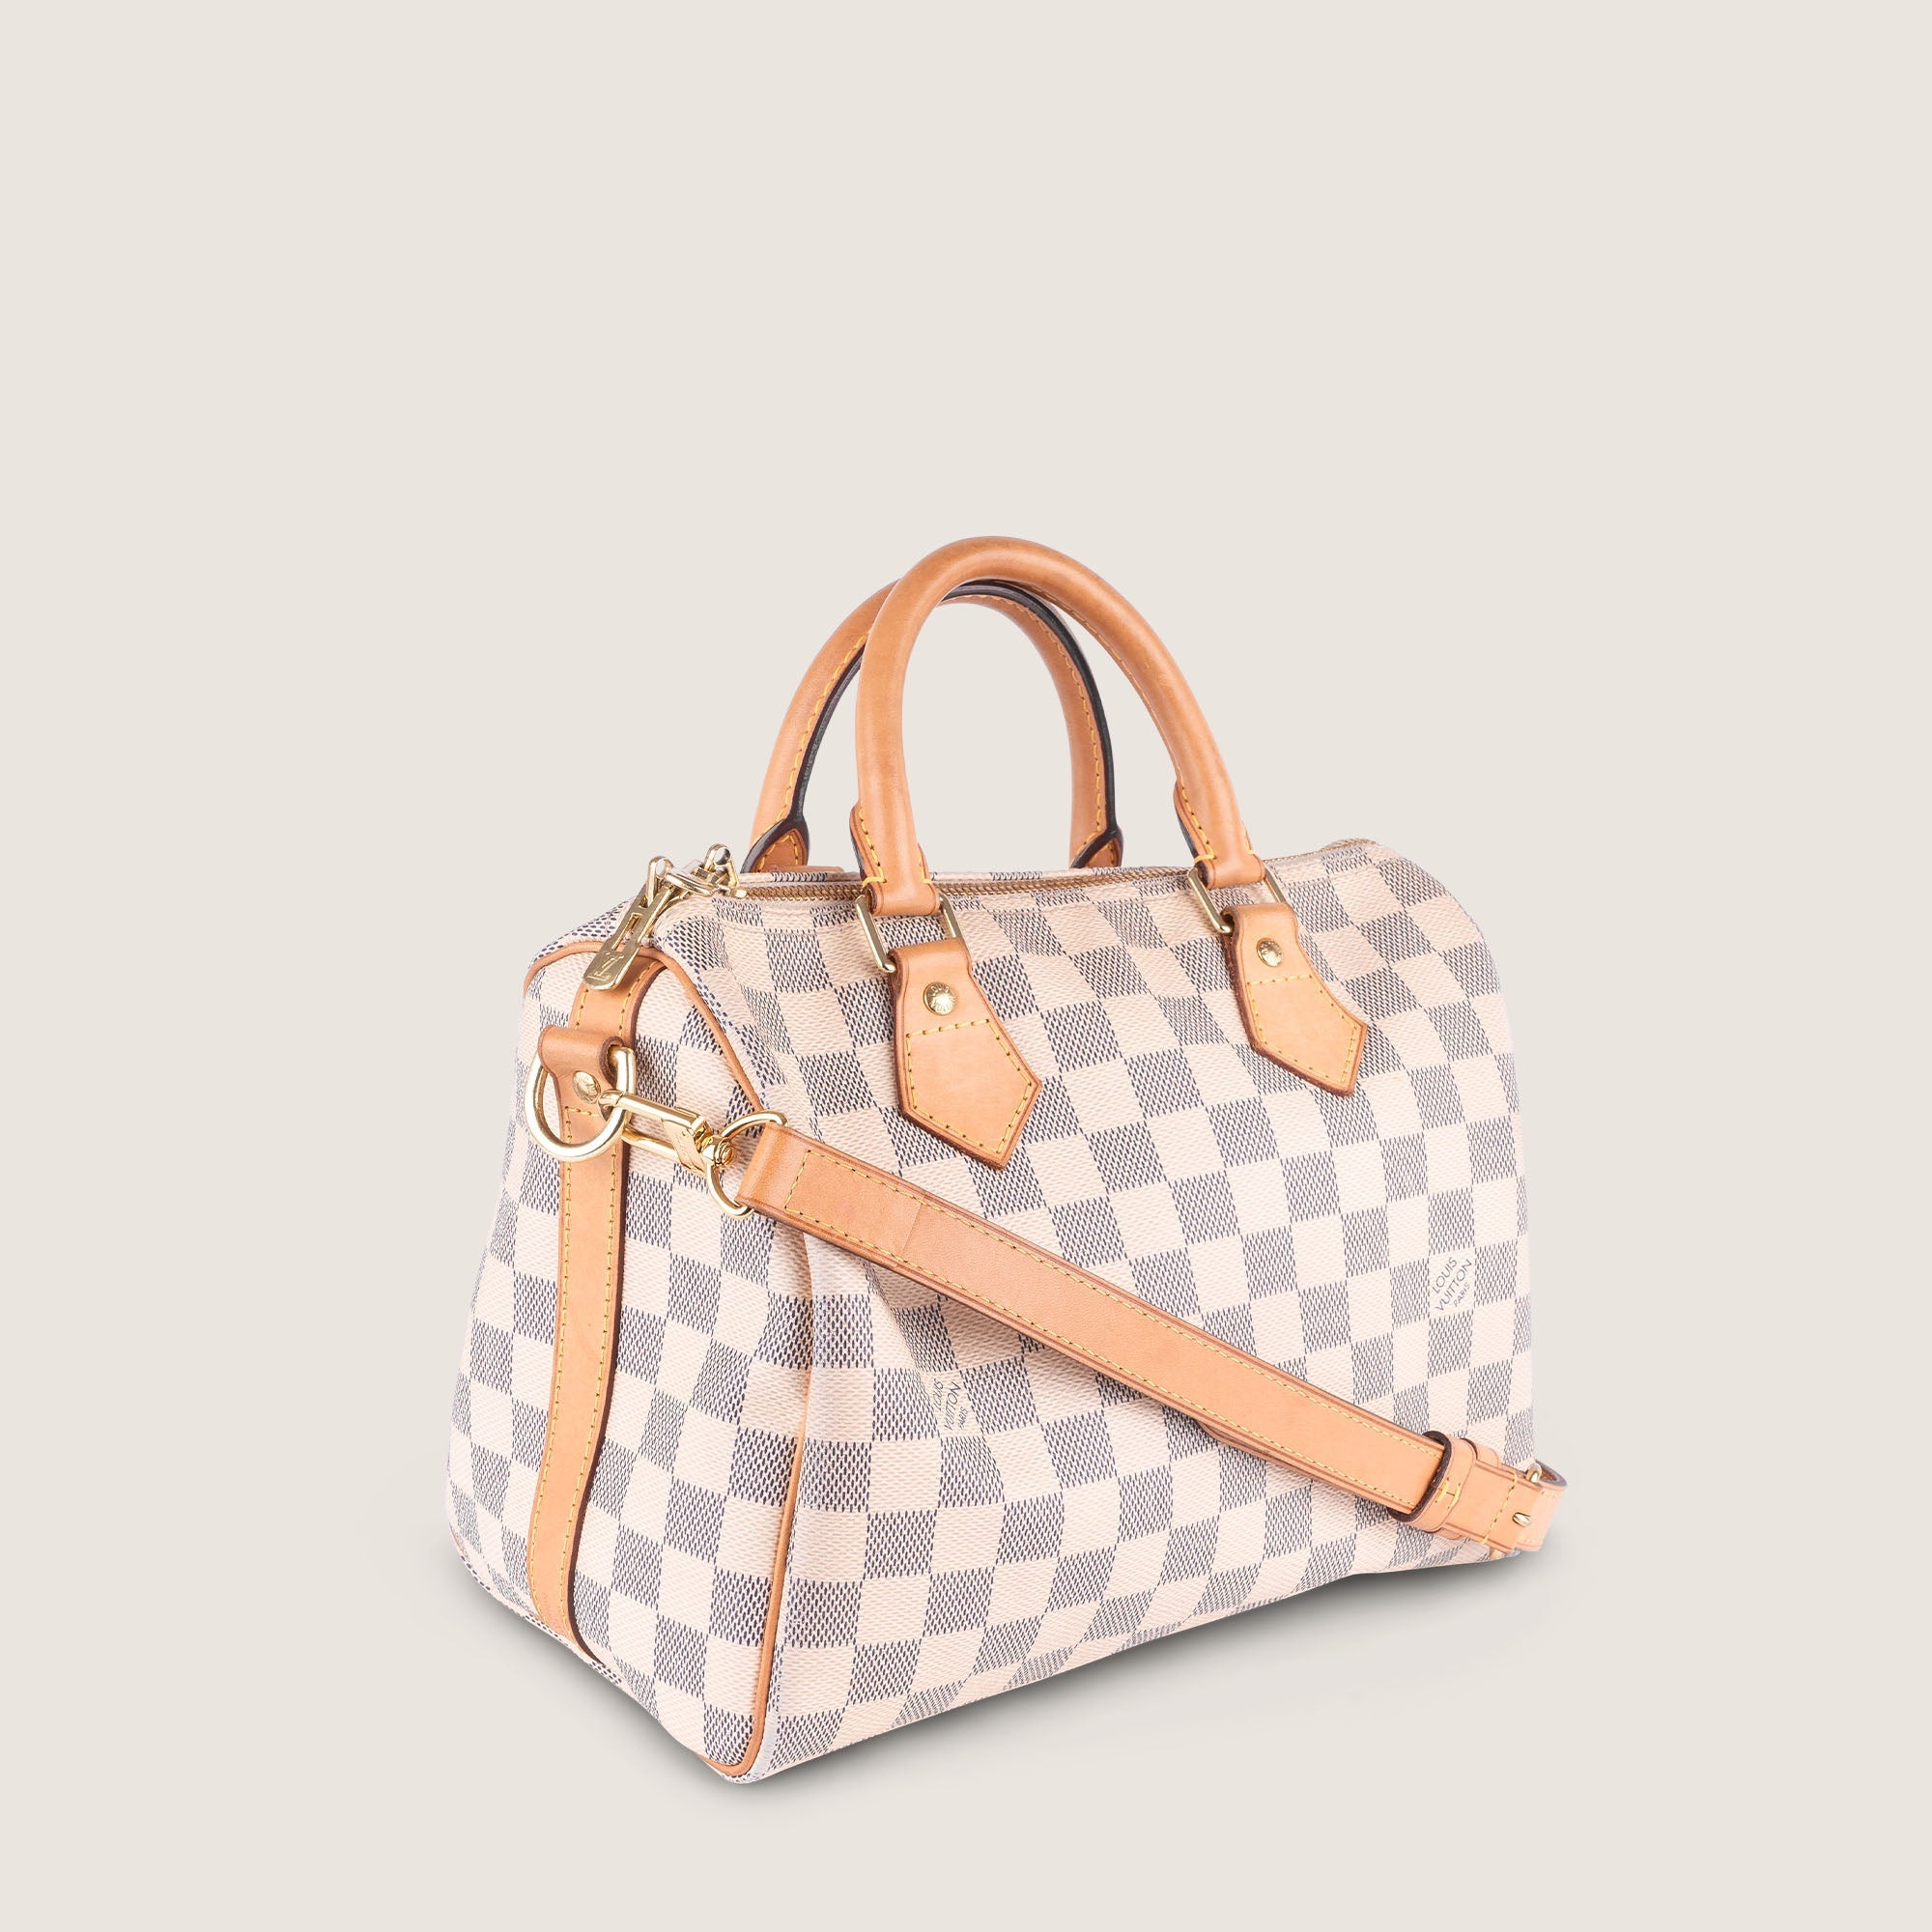 Speedy 25 Bandoulière Handbag - LOUIS VUITTON - Affordable Luxury